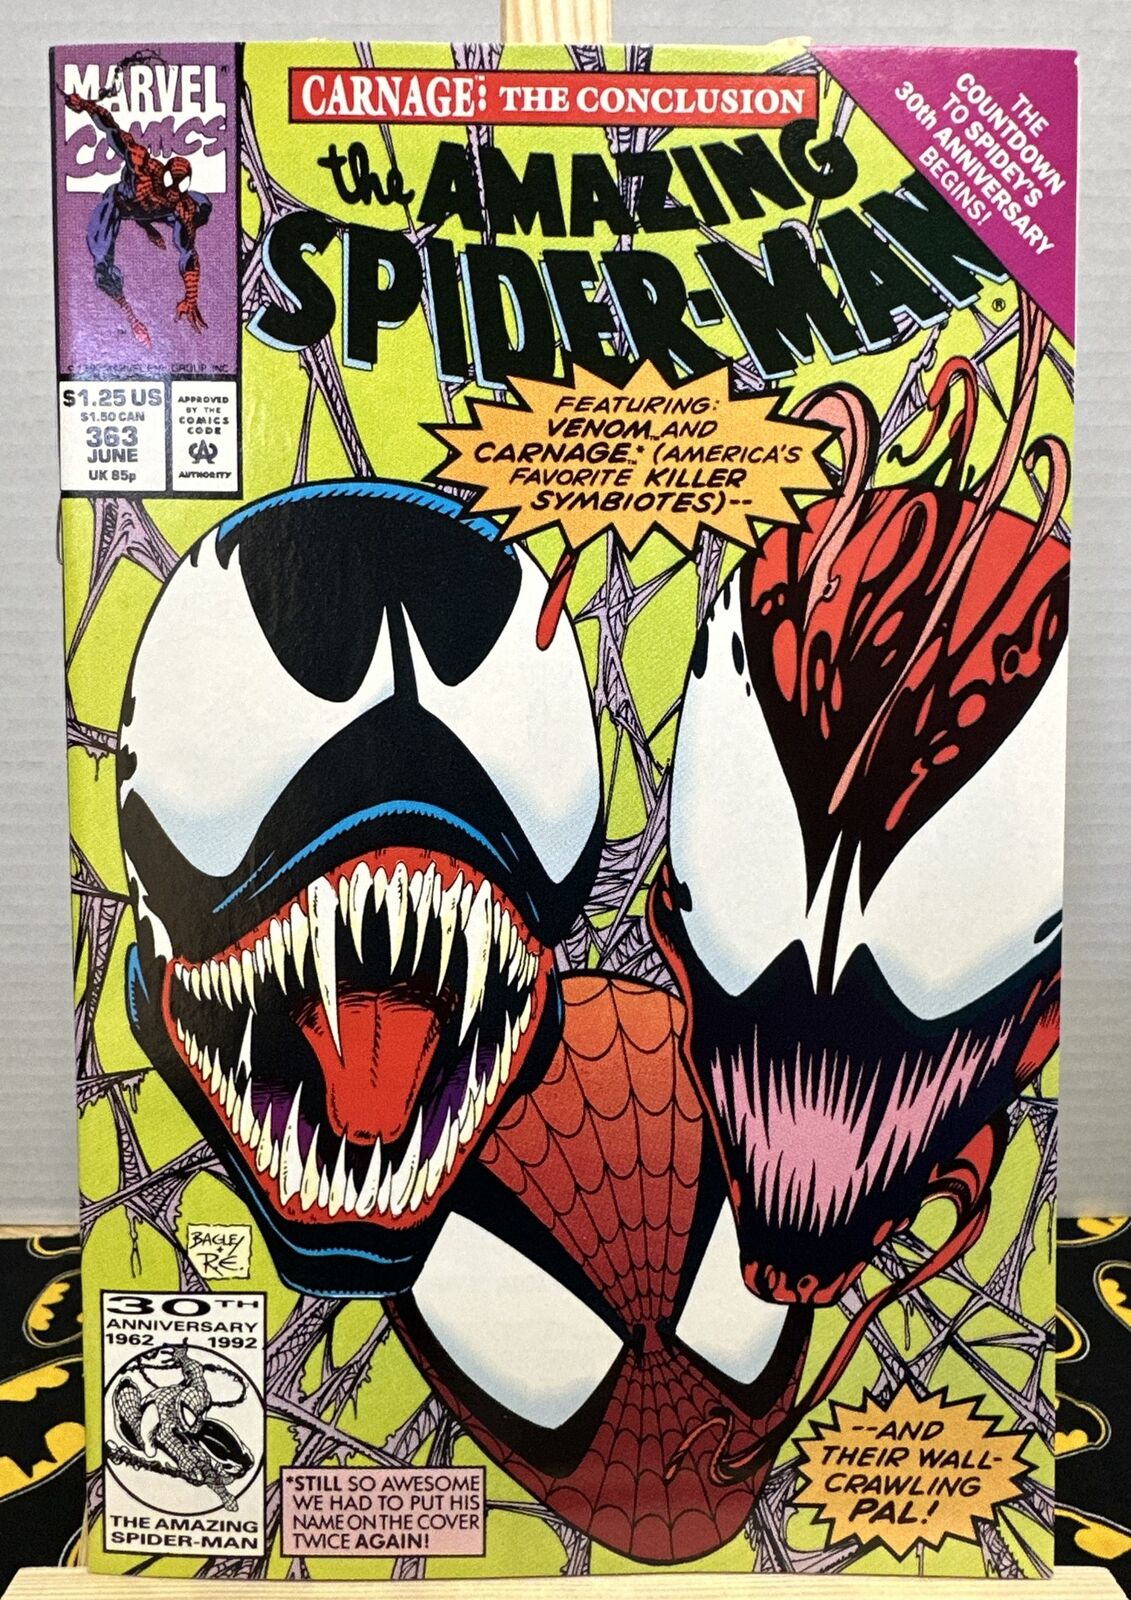 The amazing spiderman #363 Venom Carnage